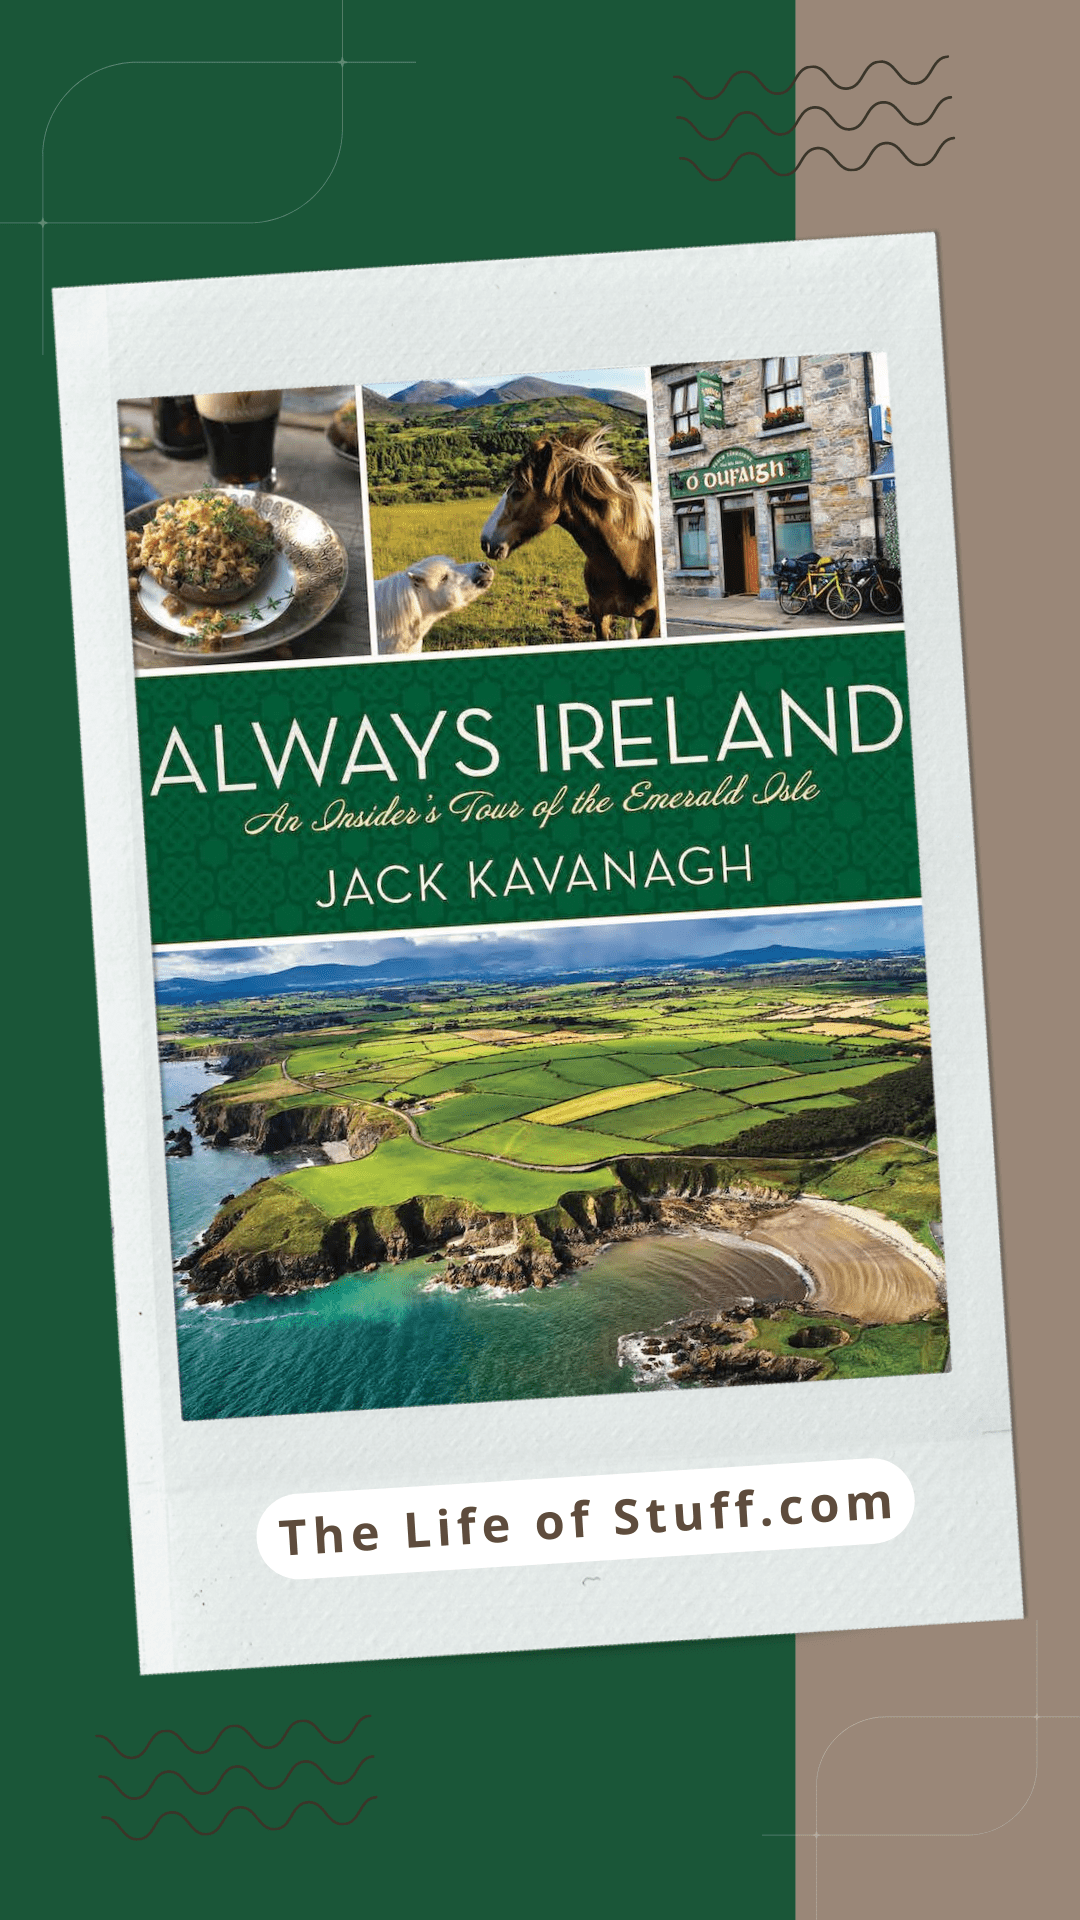 ALWAYS IRELAND BY JACK KAVANAGH - AN INSIDER'S TOUR OF THE EMERALD ISLE - THE LIFE OF STUFF - Irish Online Magazine